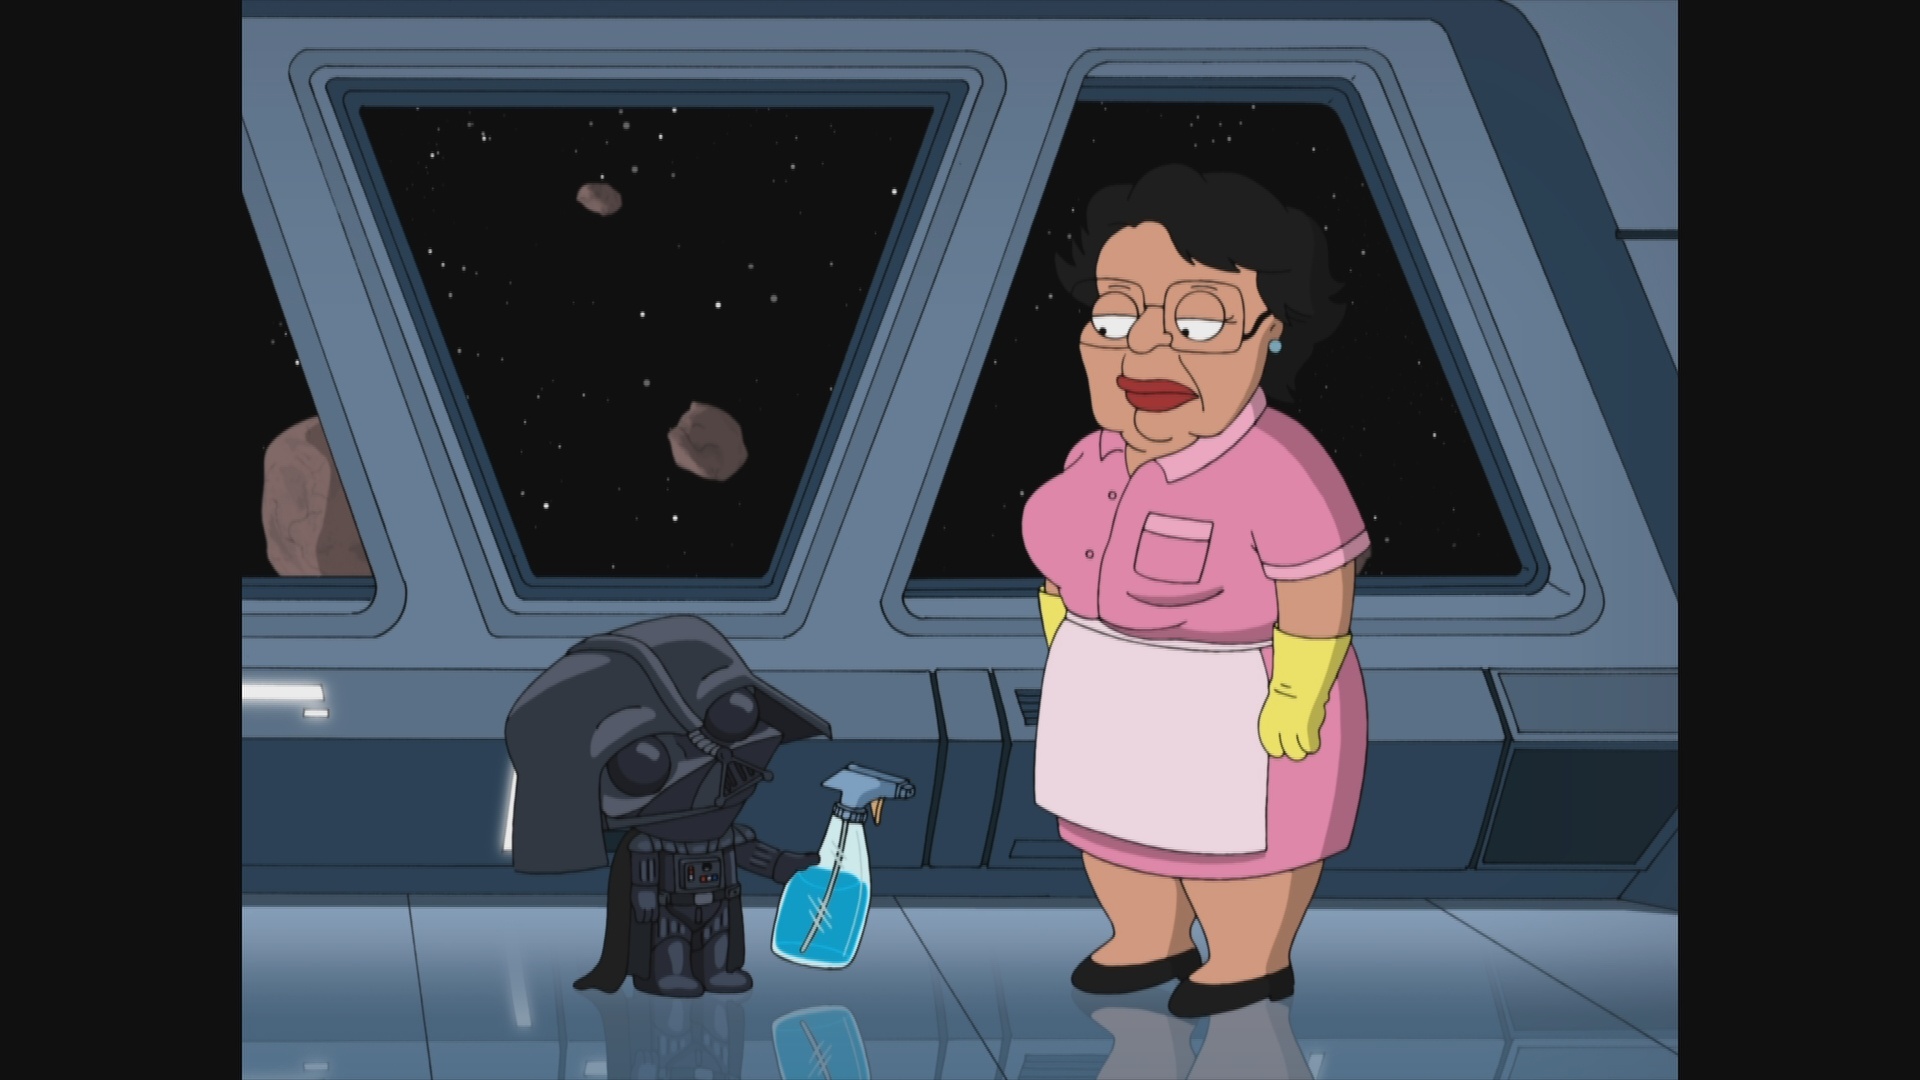 Family Guy: Something, Something, Something, Darkside